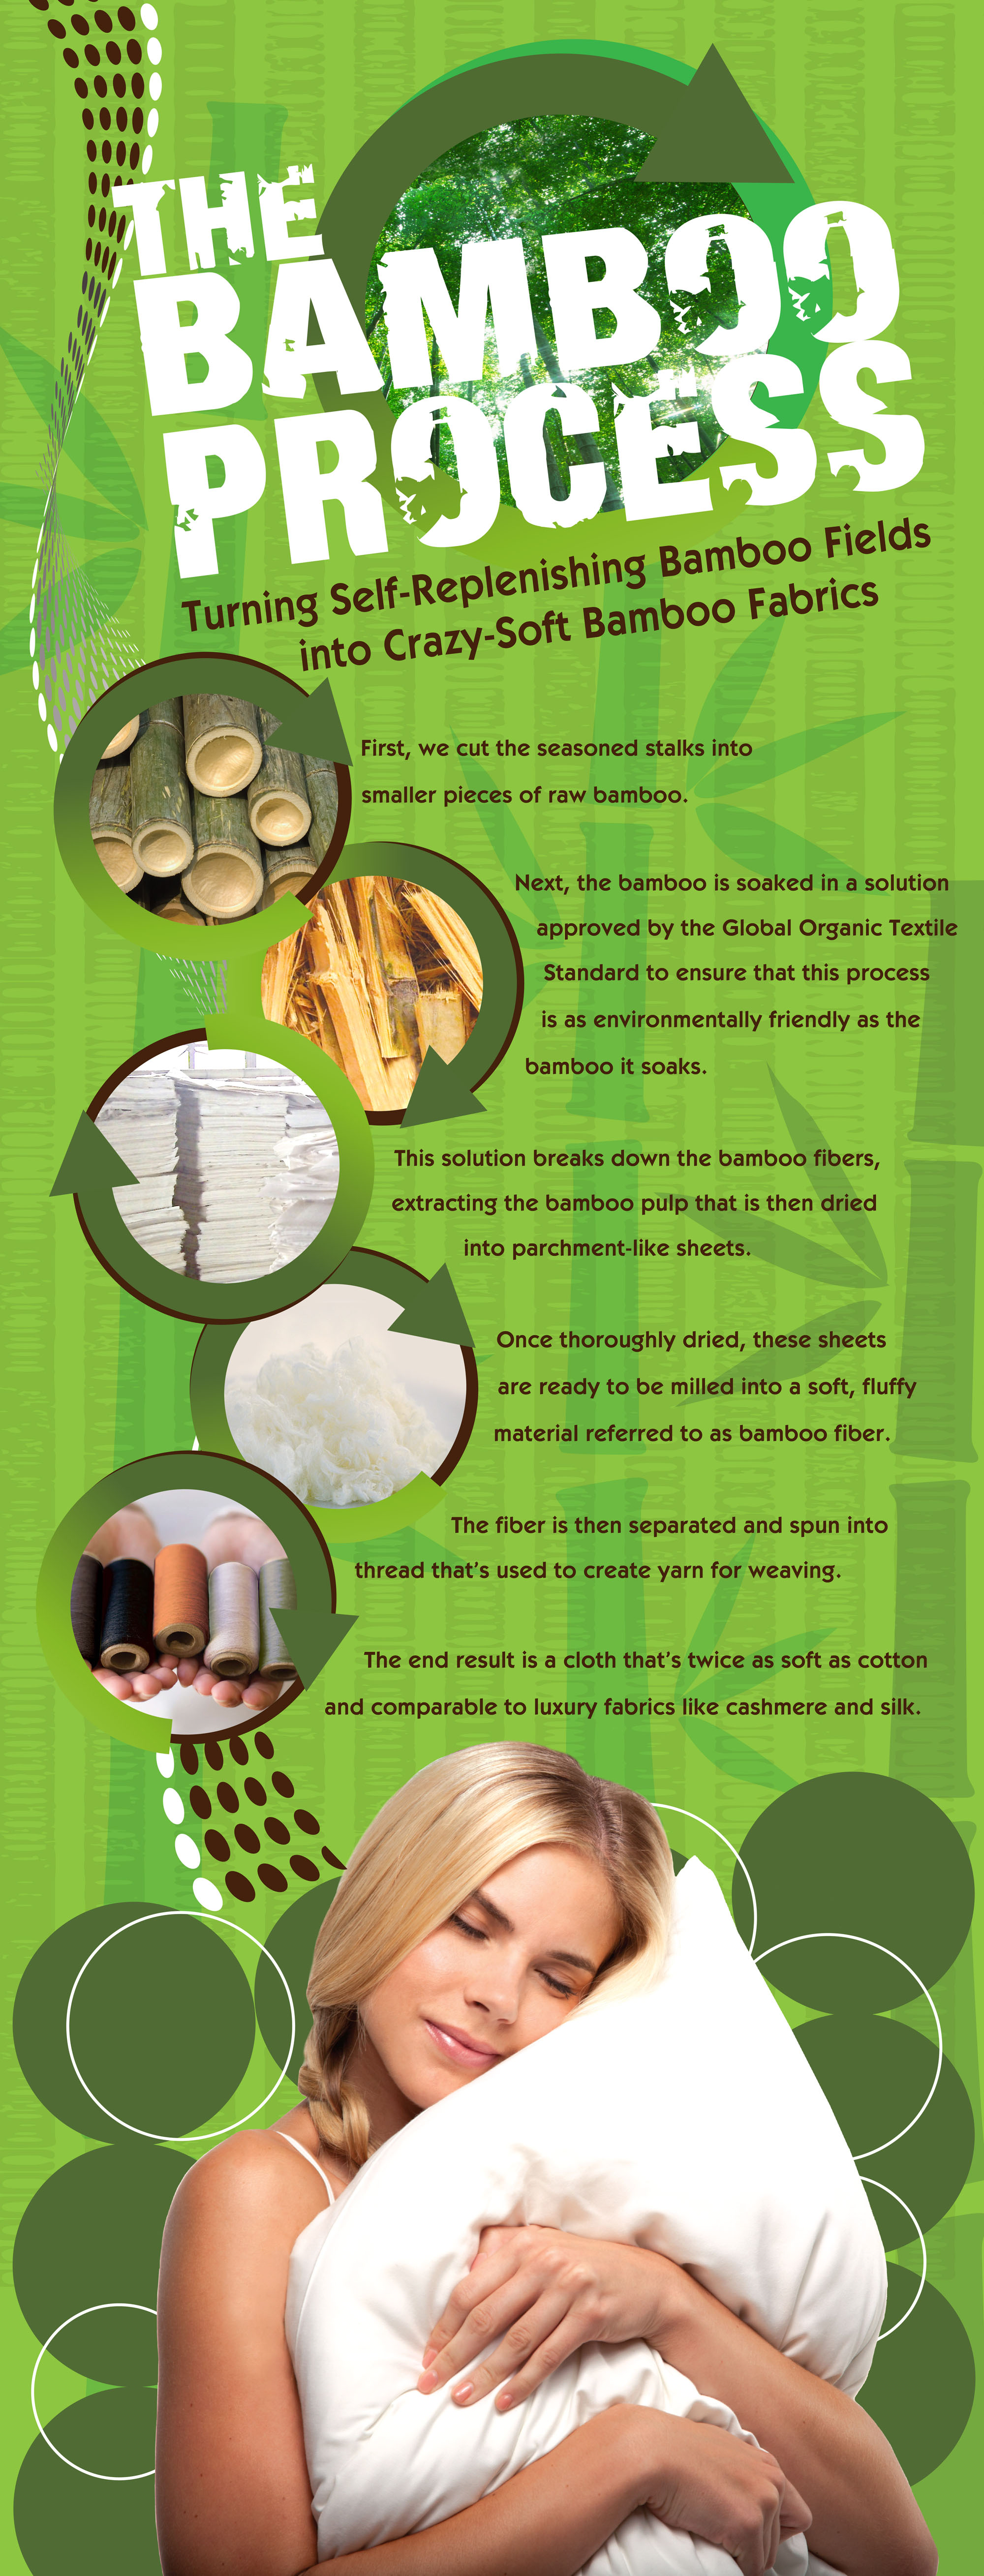 Cariloha Bamboo Process